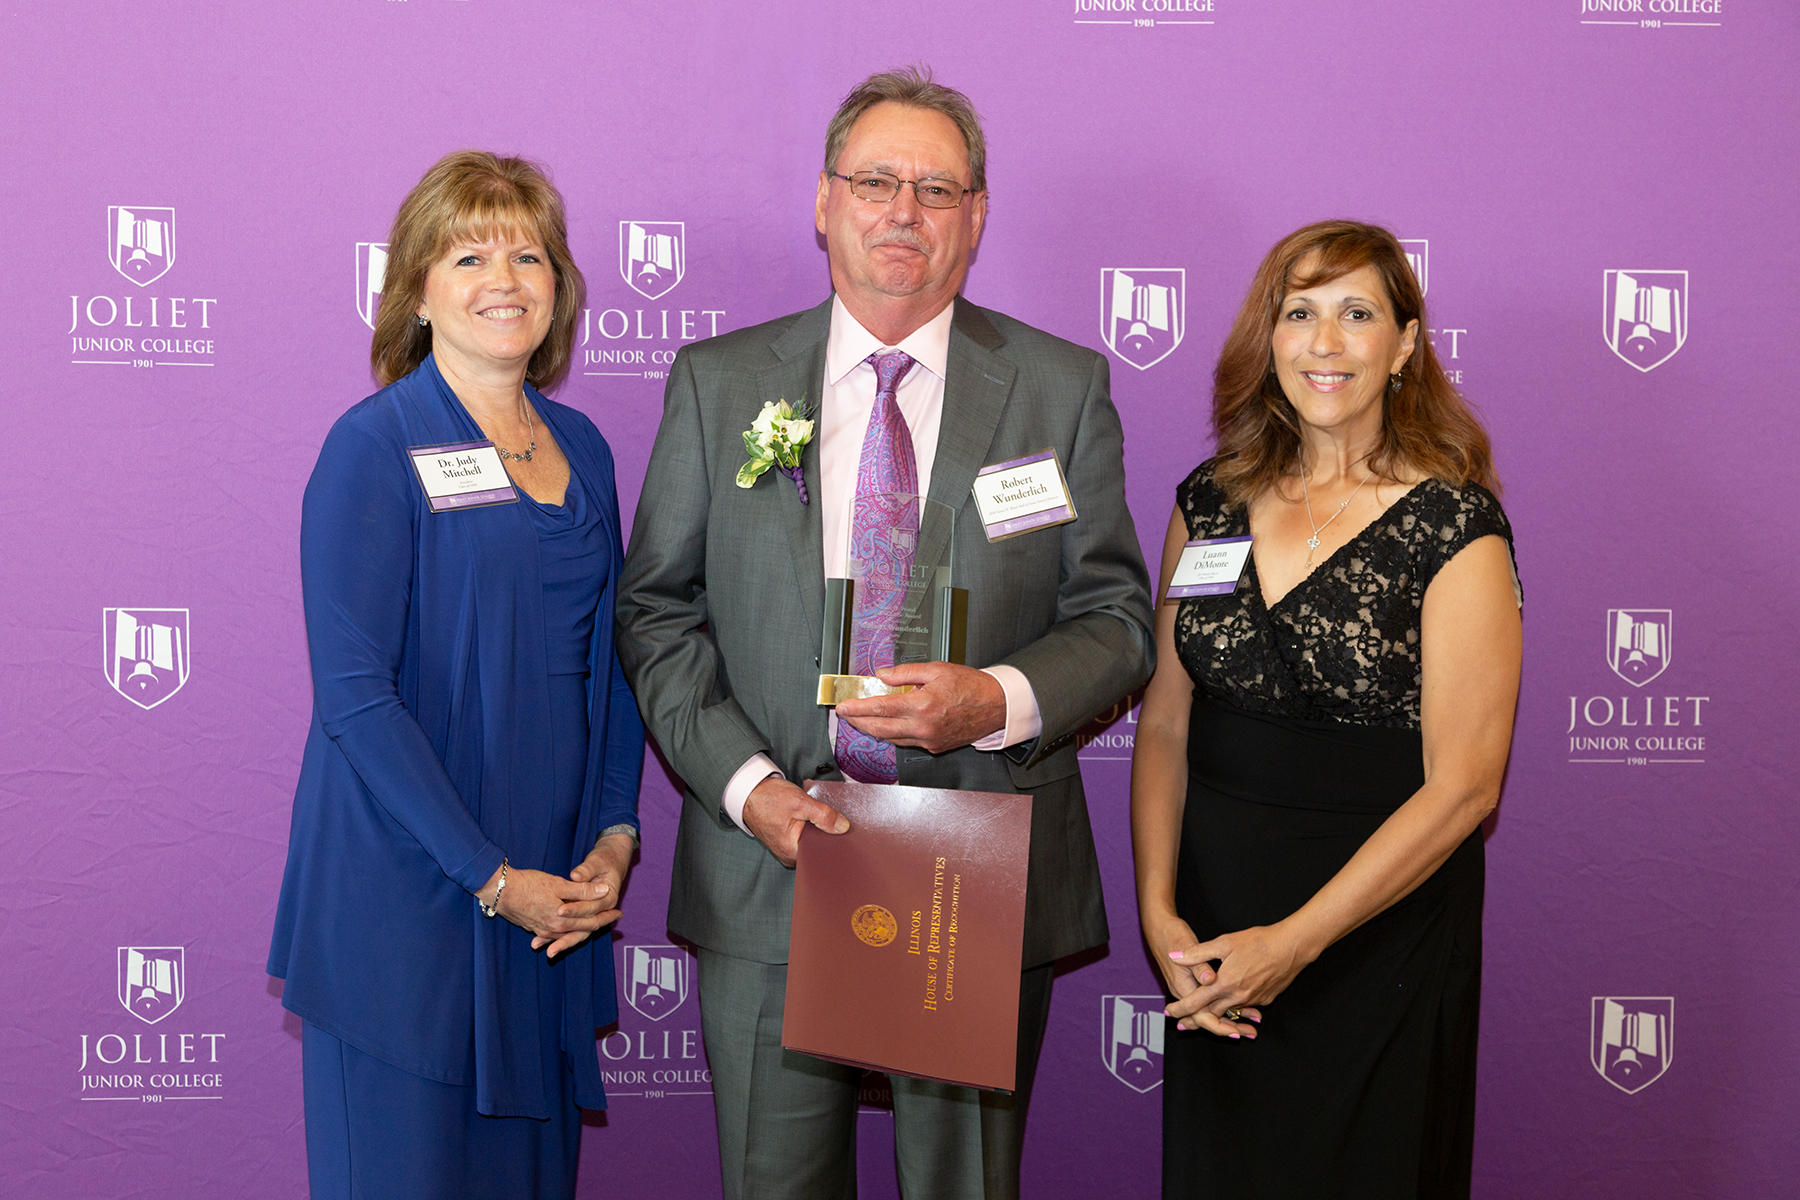 From left: JJC President Dr. Judy Mitchell, Robert Wunderlich (Susan H. Wood Hall of Fame Award recipient), JJC Alumni Board Member Luann Di Monte